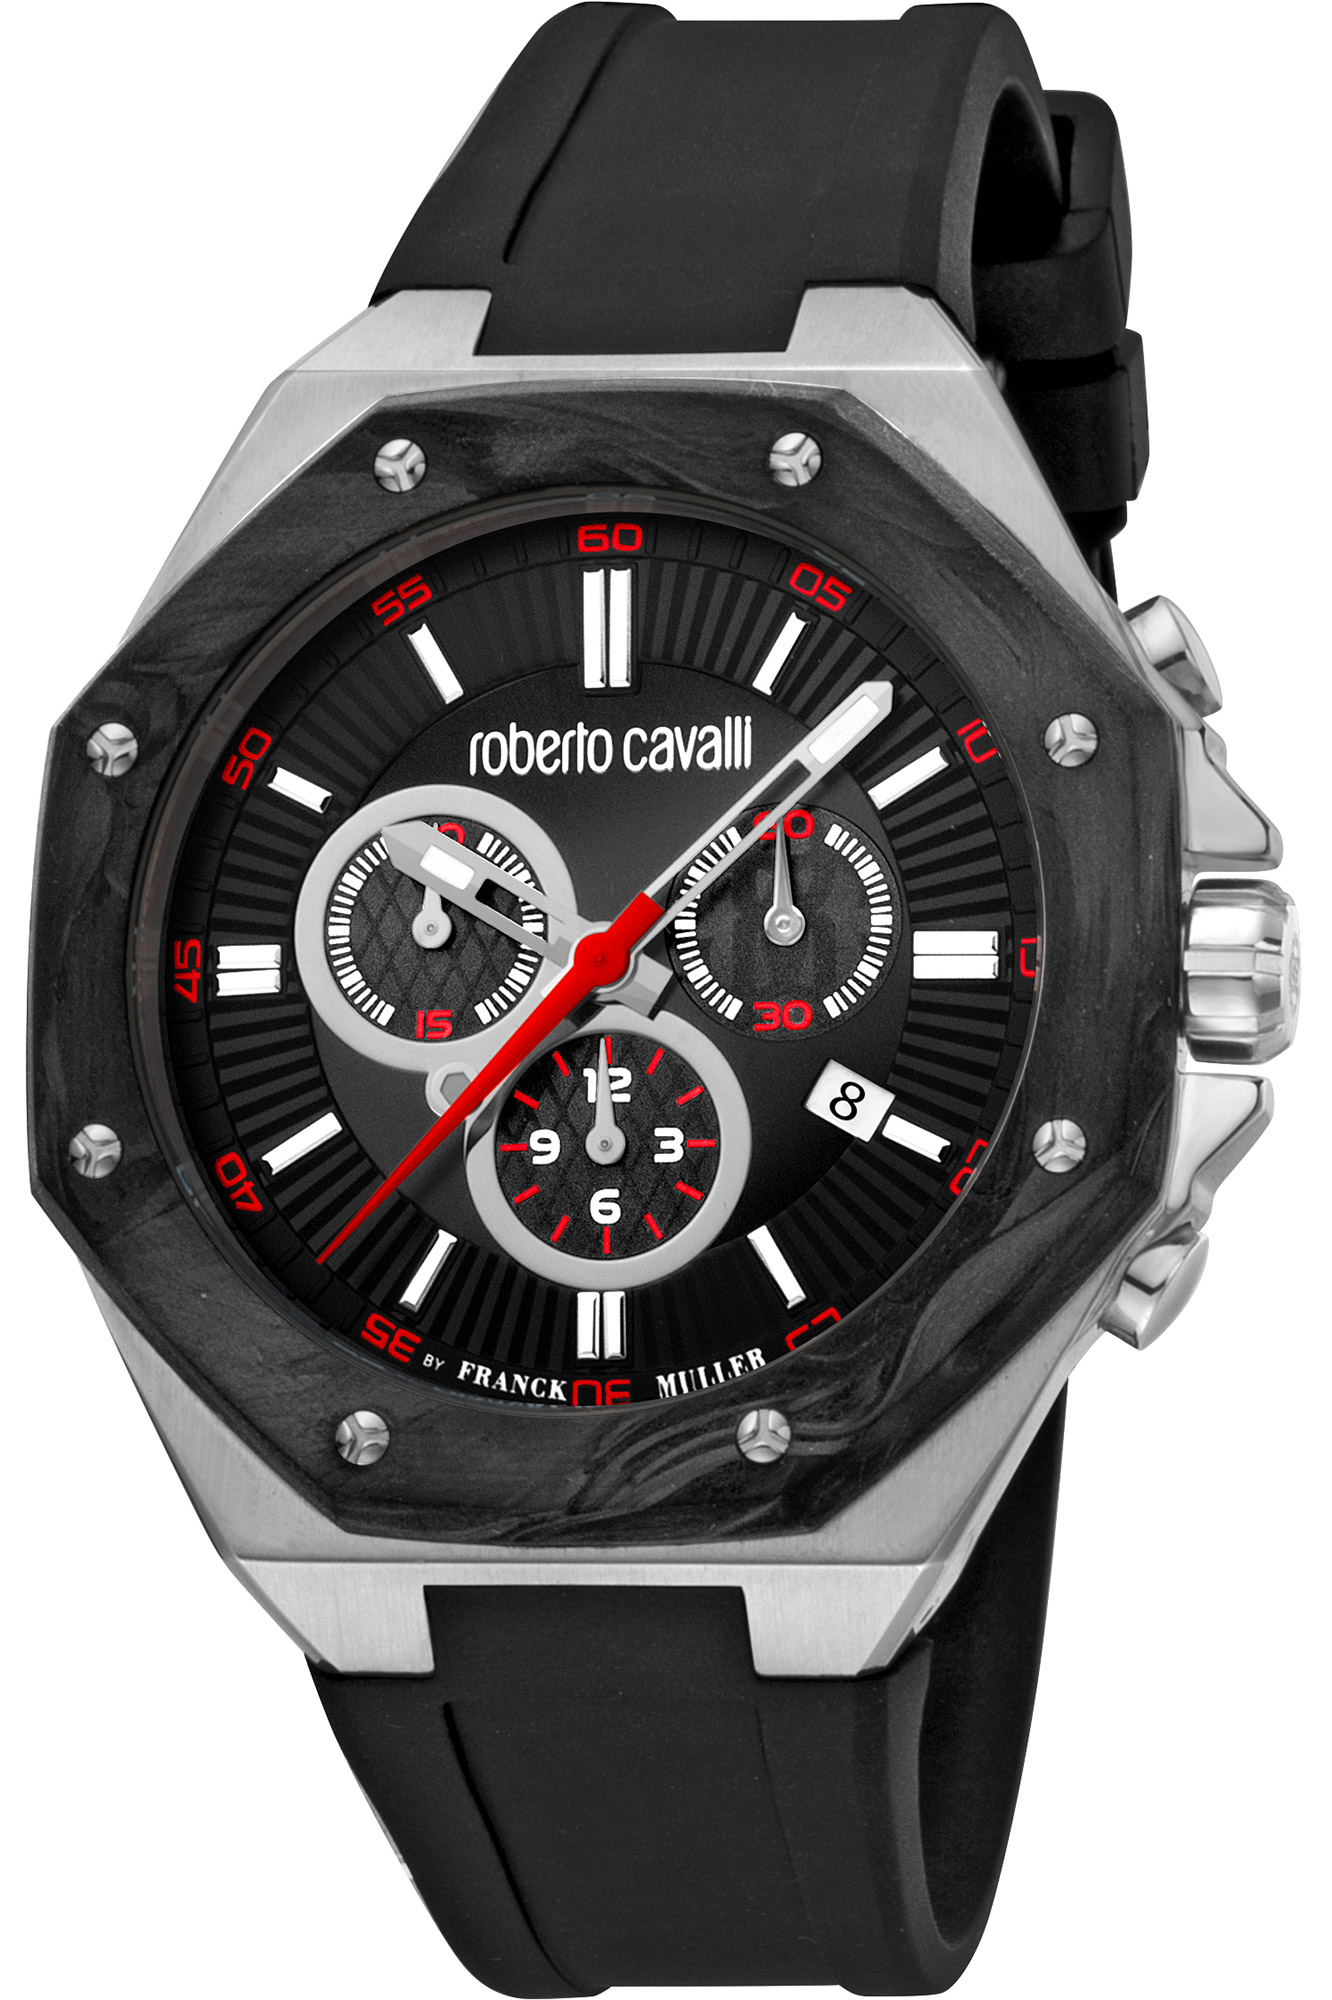 Watch Roberto Cavalli by Franck Muller rv1g123p1011